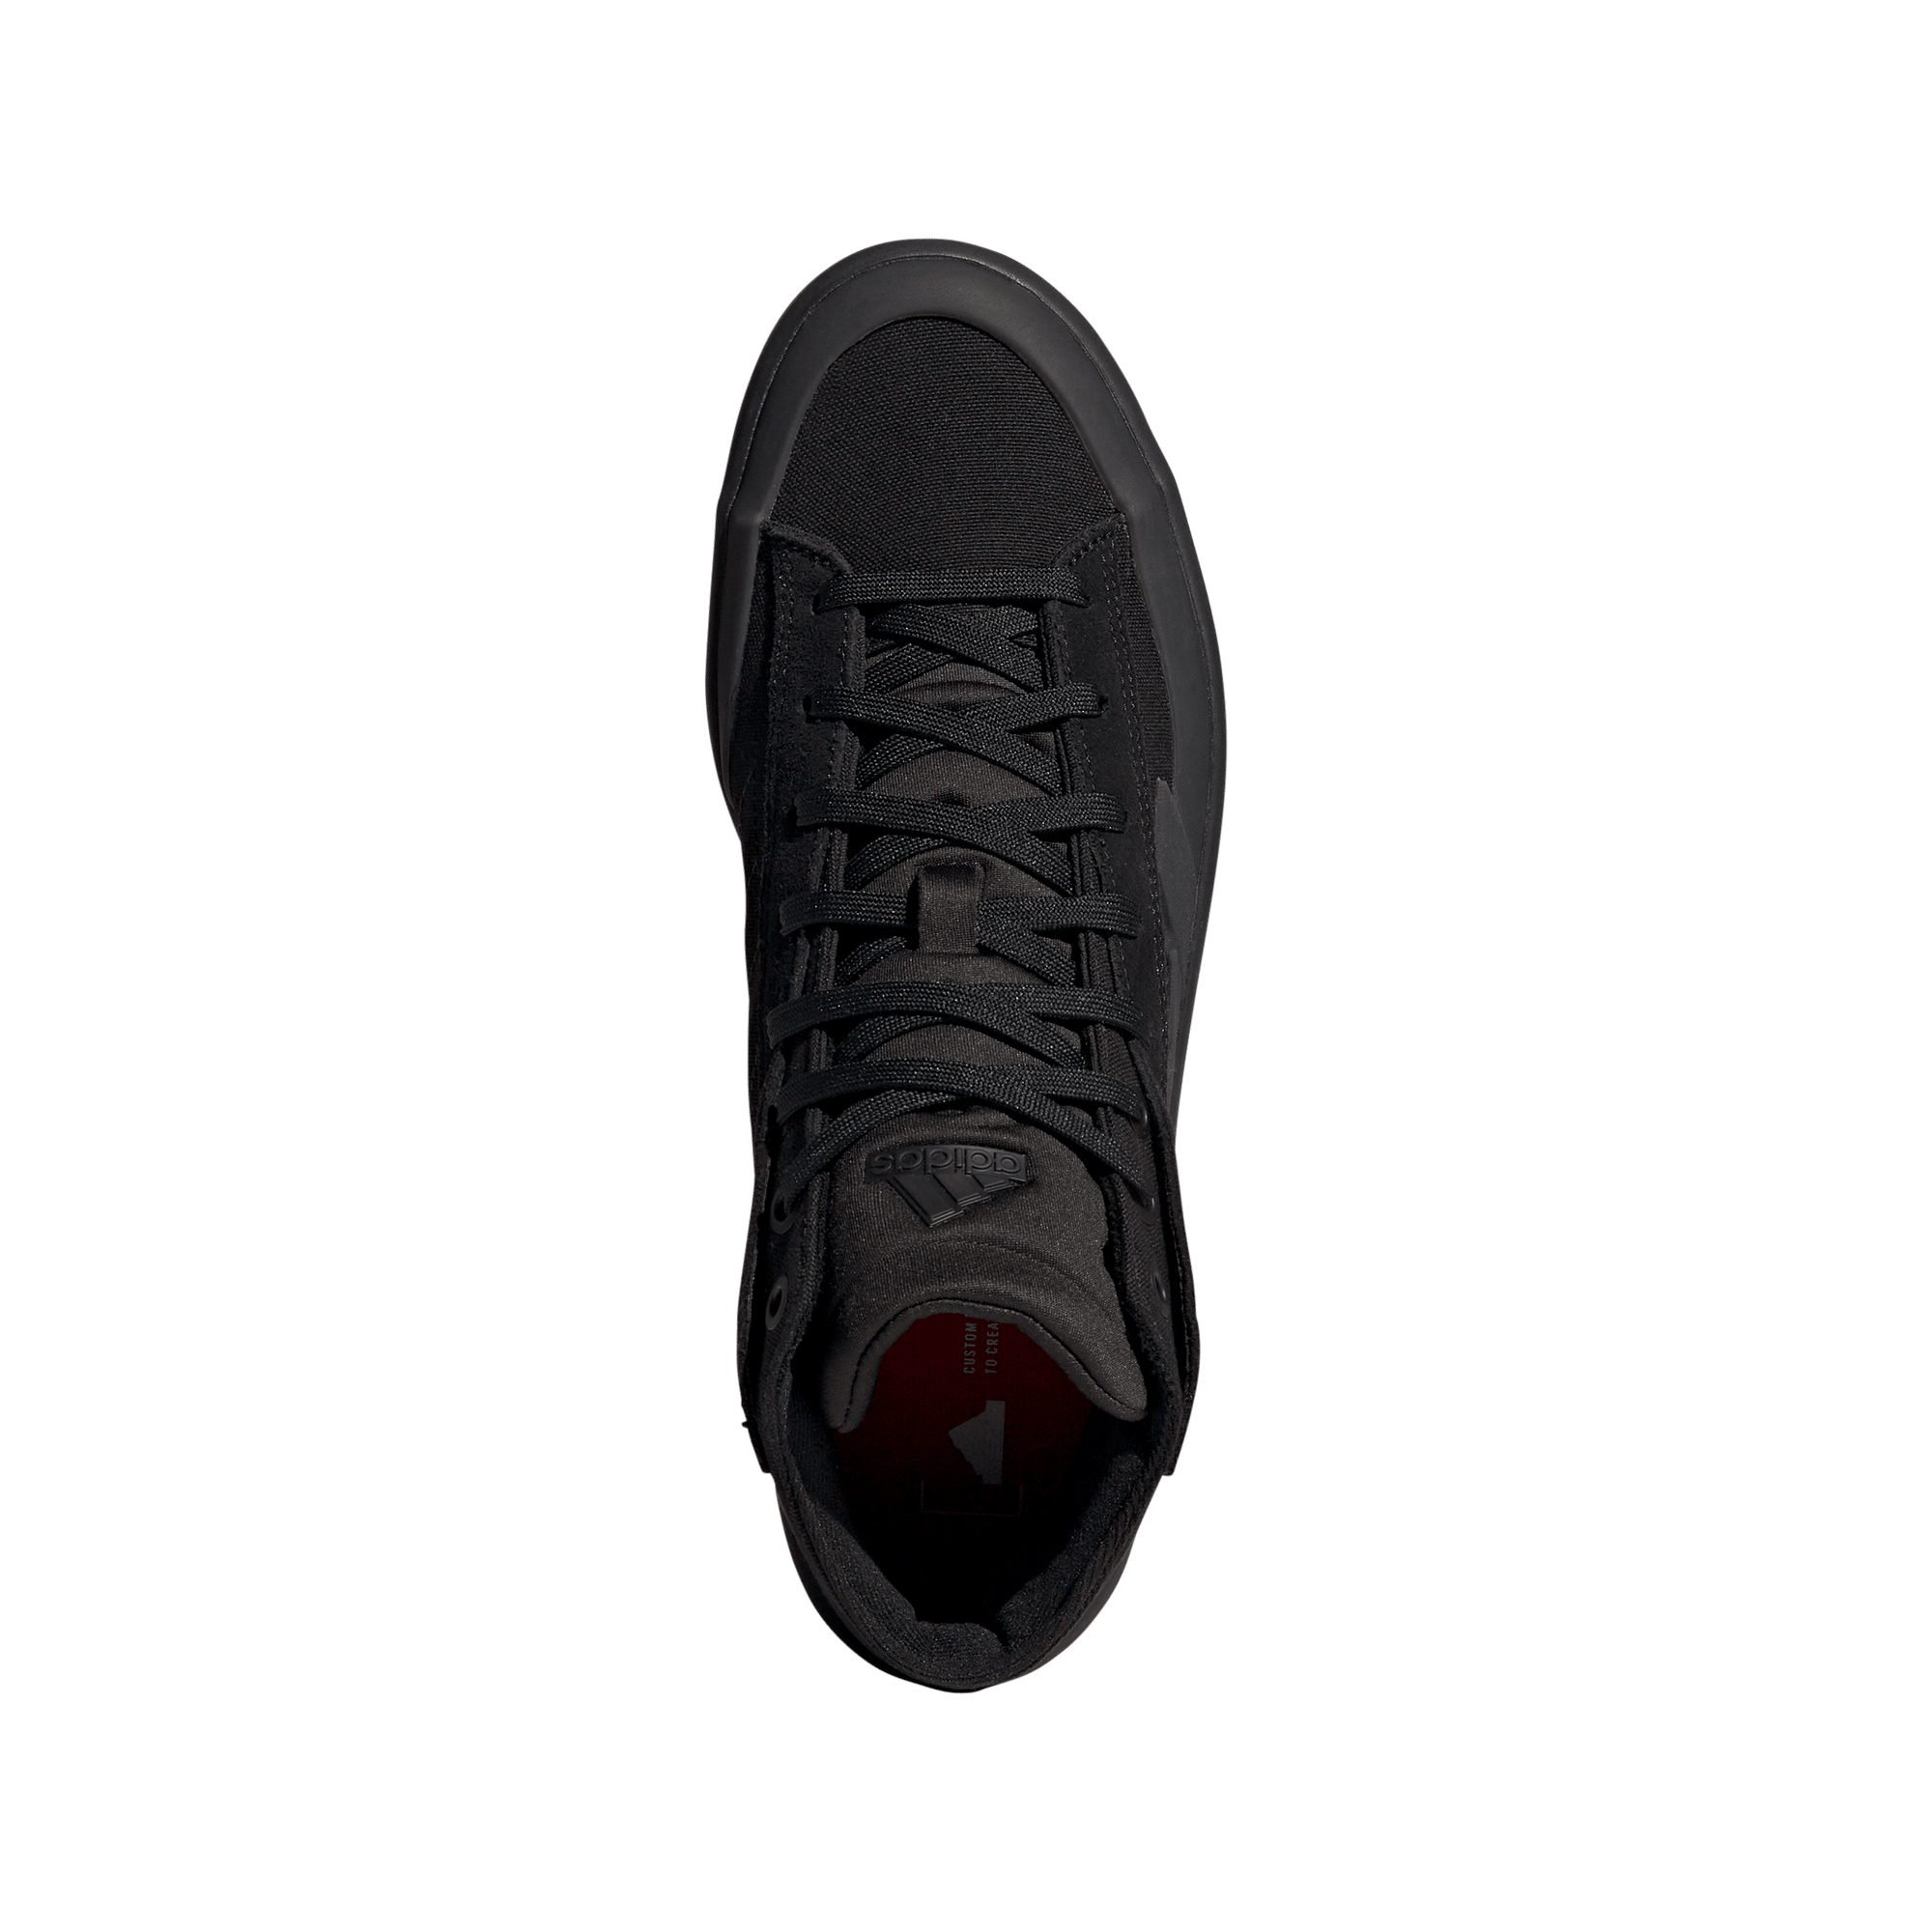 ADIDAS ZNSORED Hi Shoes Core Black/Core Black/Core Black Men's Skate Shoes Adidas 